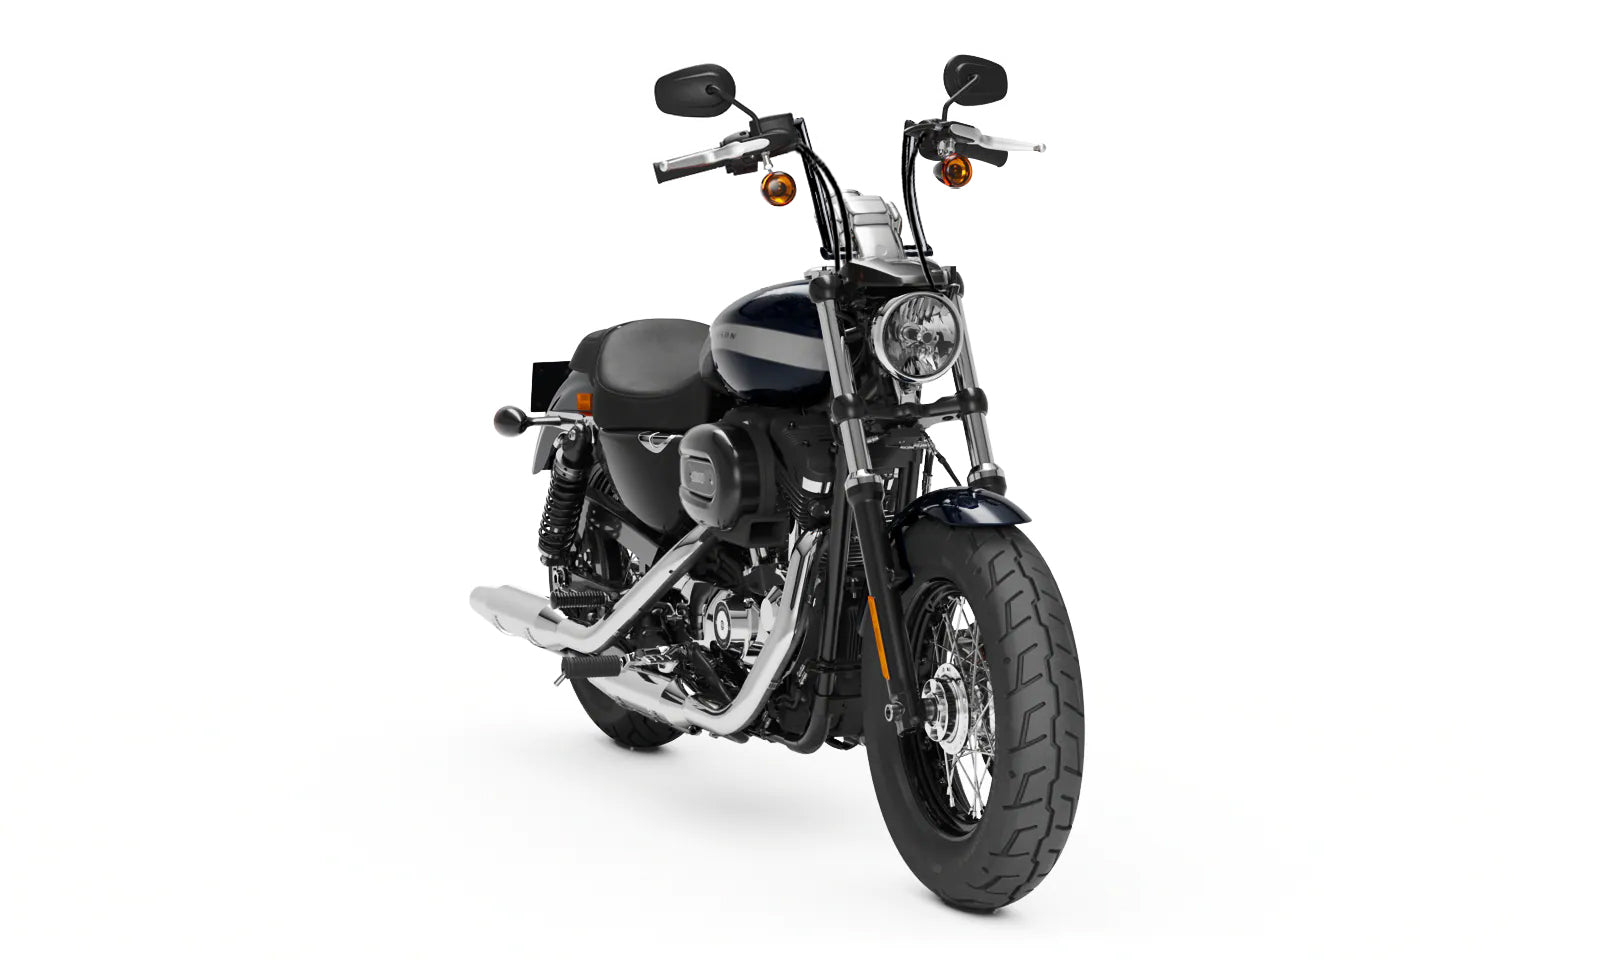 Viking Iron Born 9" Handlebar For Harley Sportster 1200 Custom XL1200C Gloss Black Bag on Bike View @expand